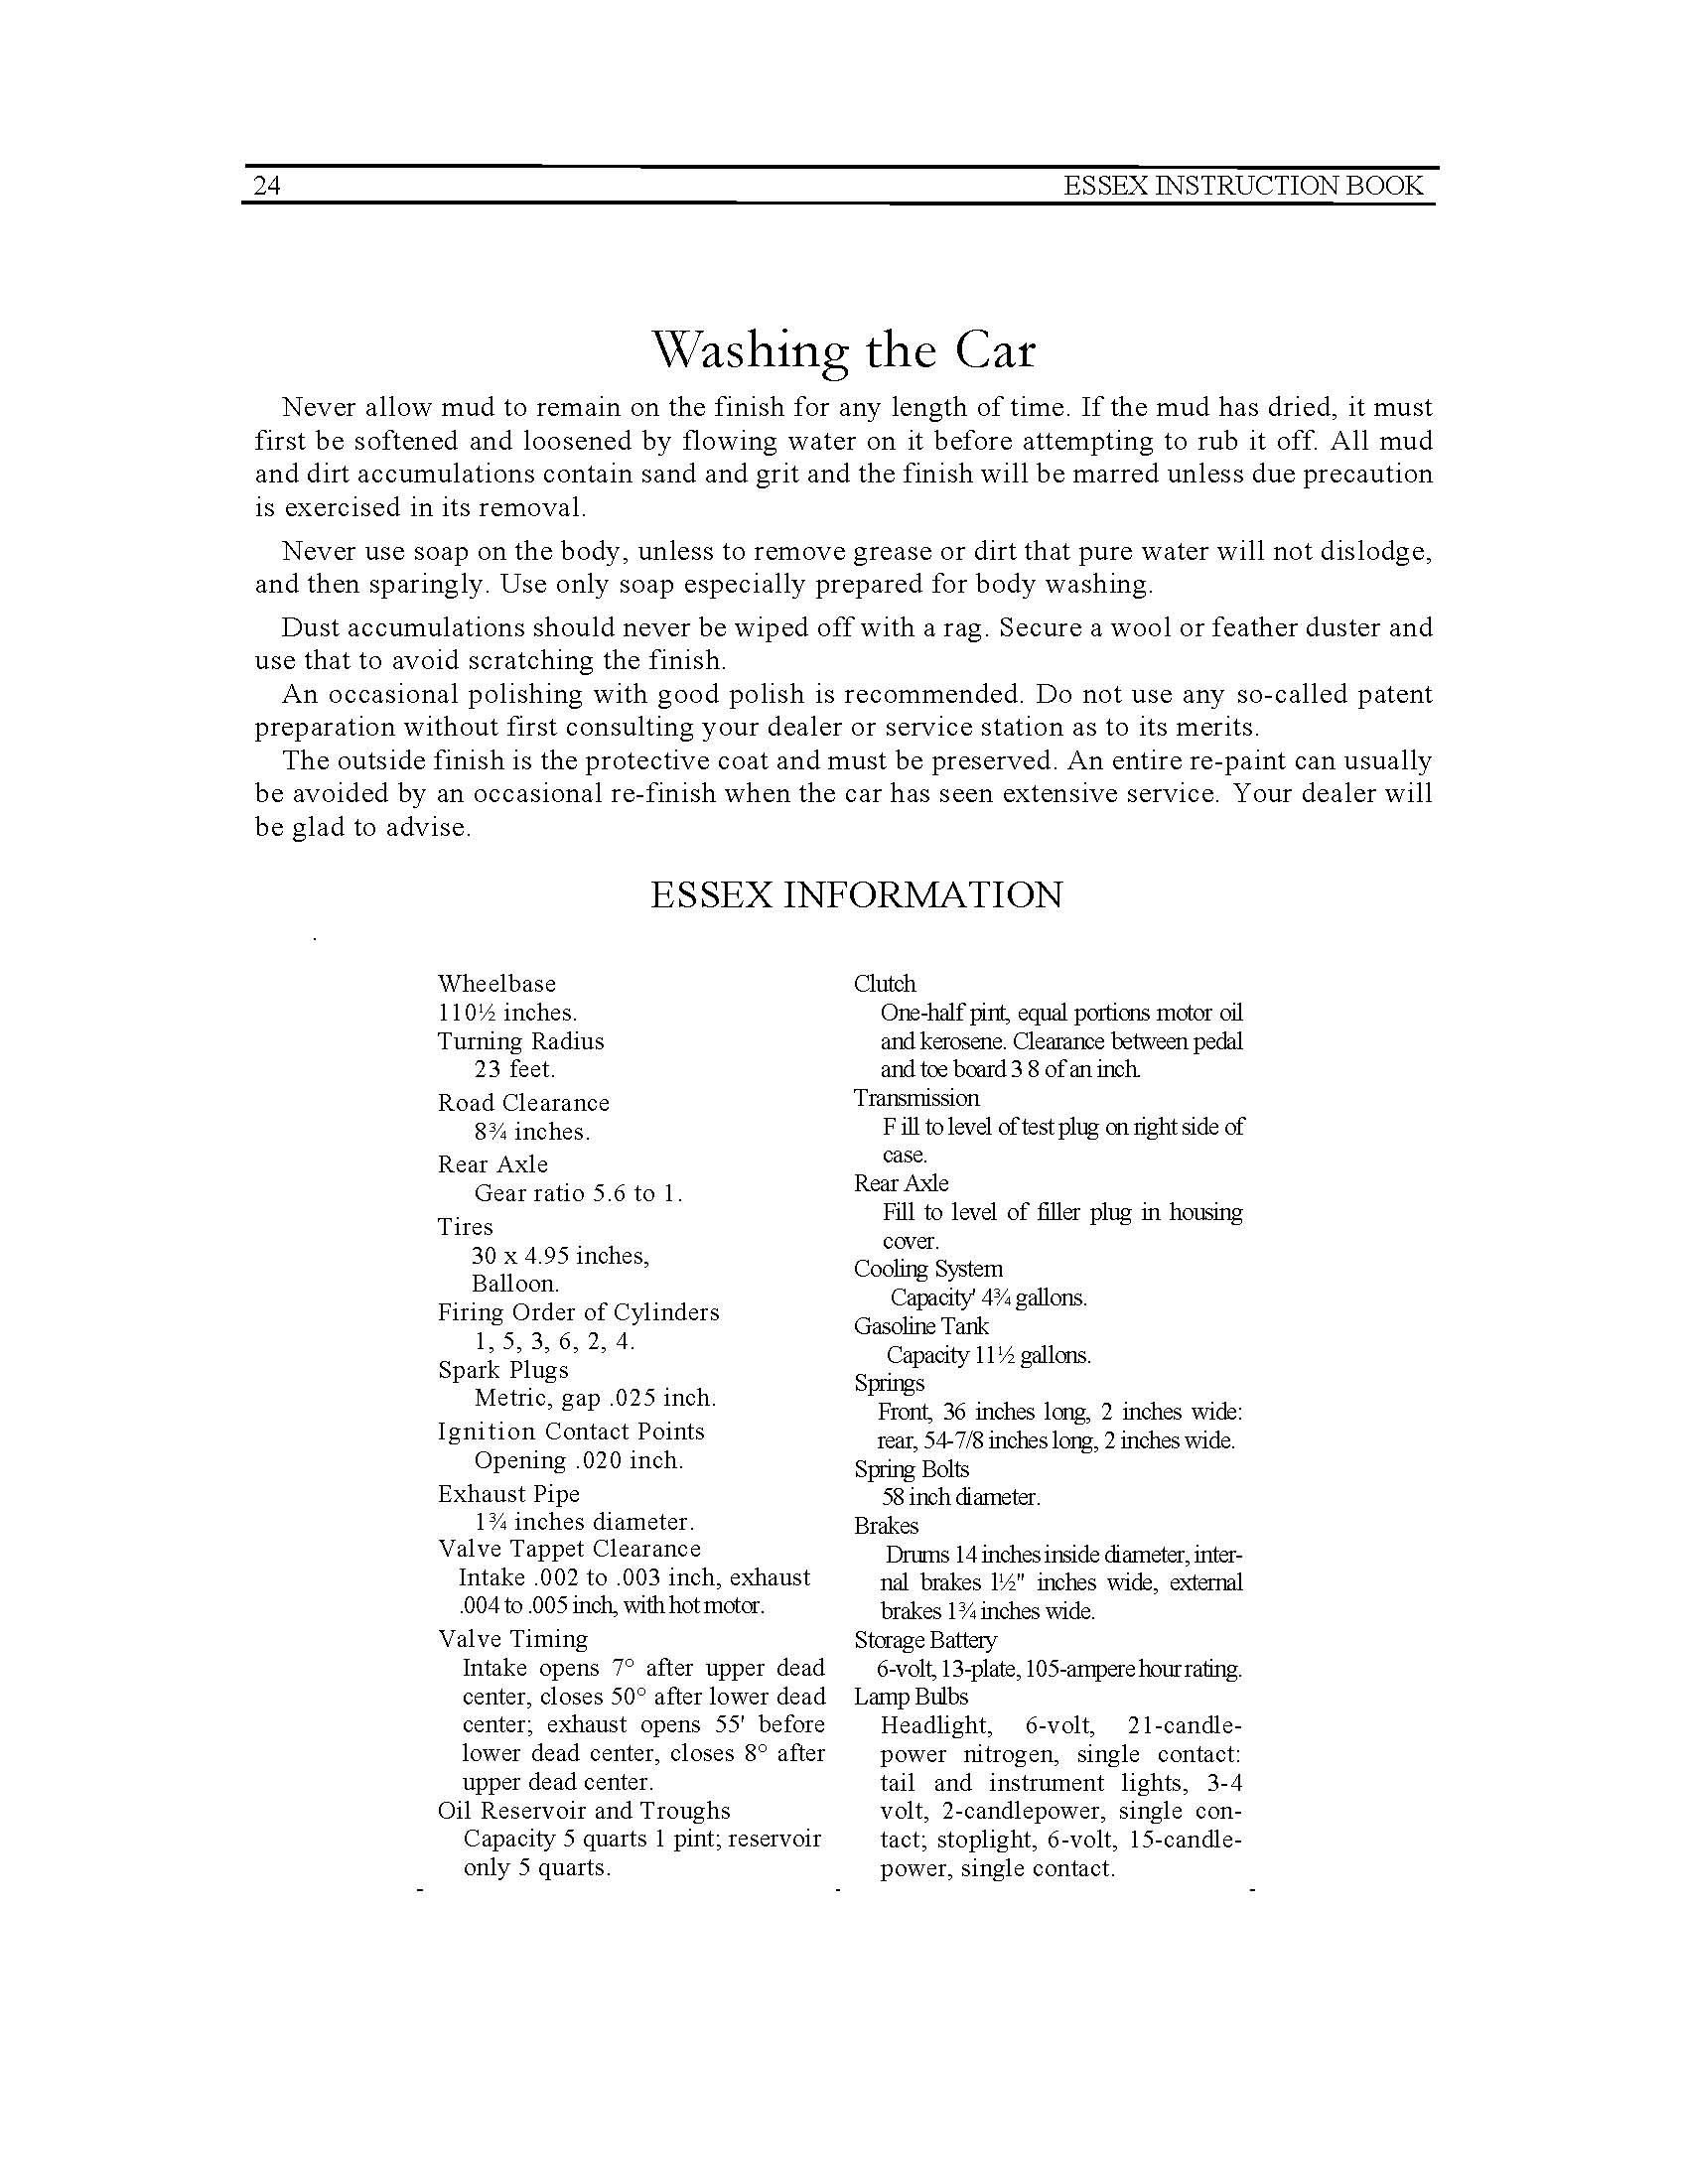 1926 Essex Automobile Instruction Manual Page 18